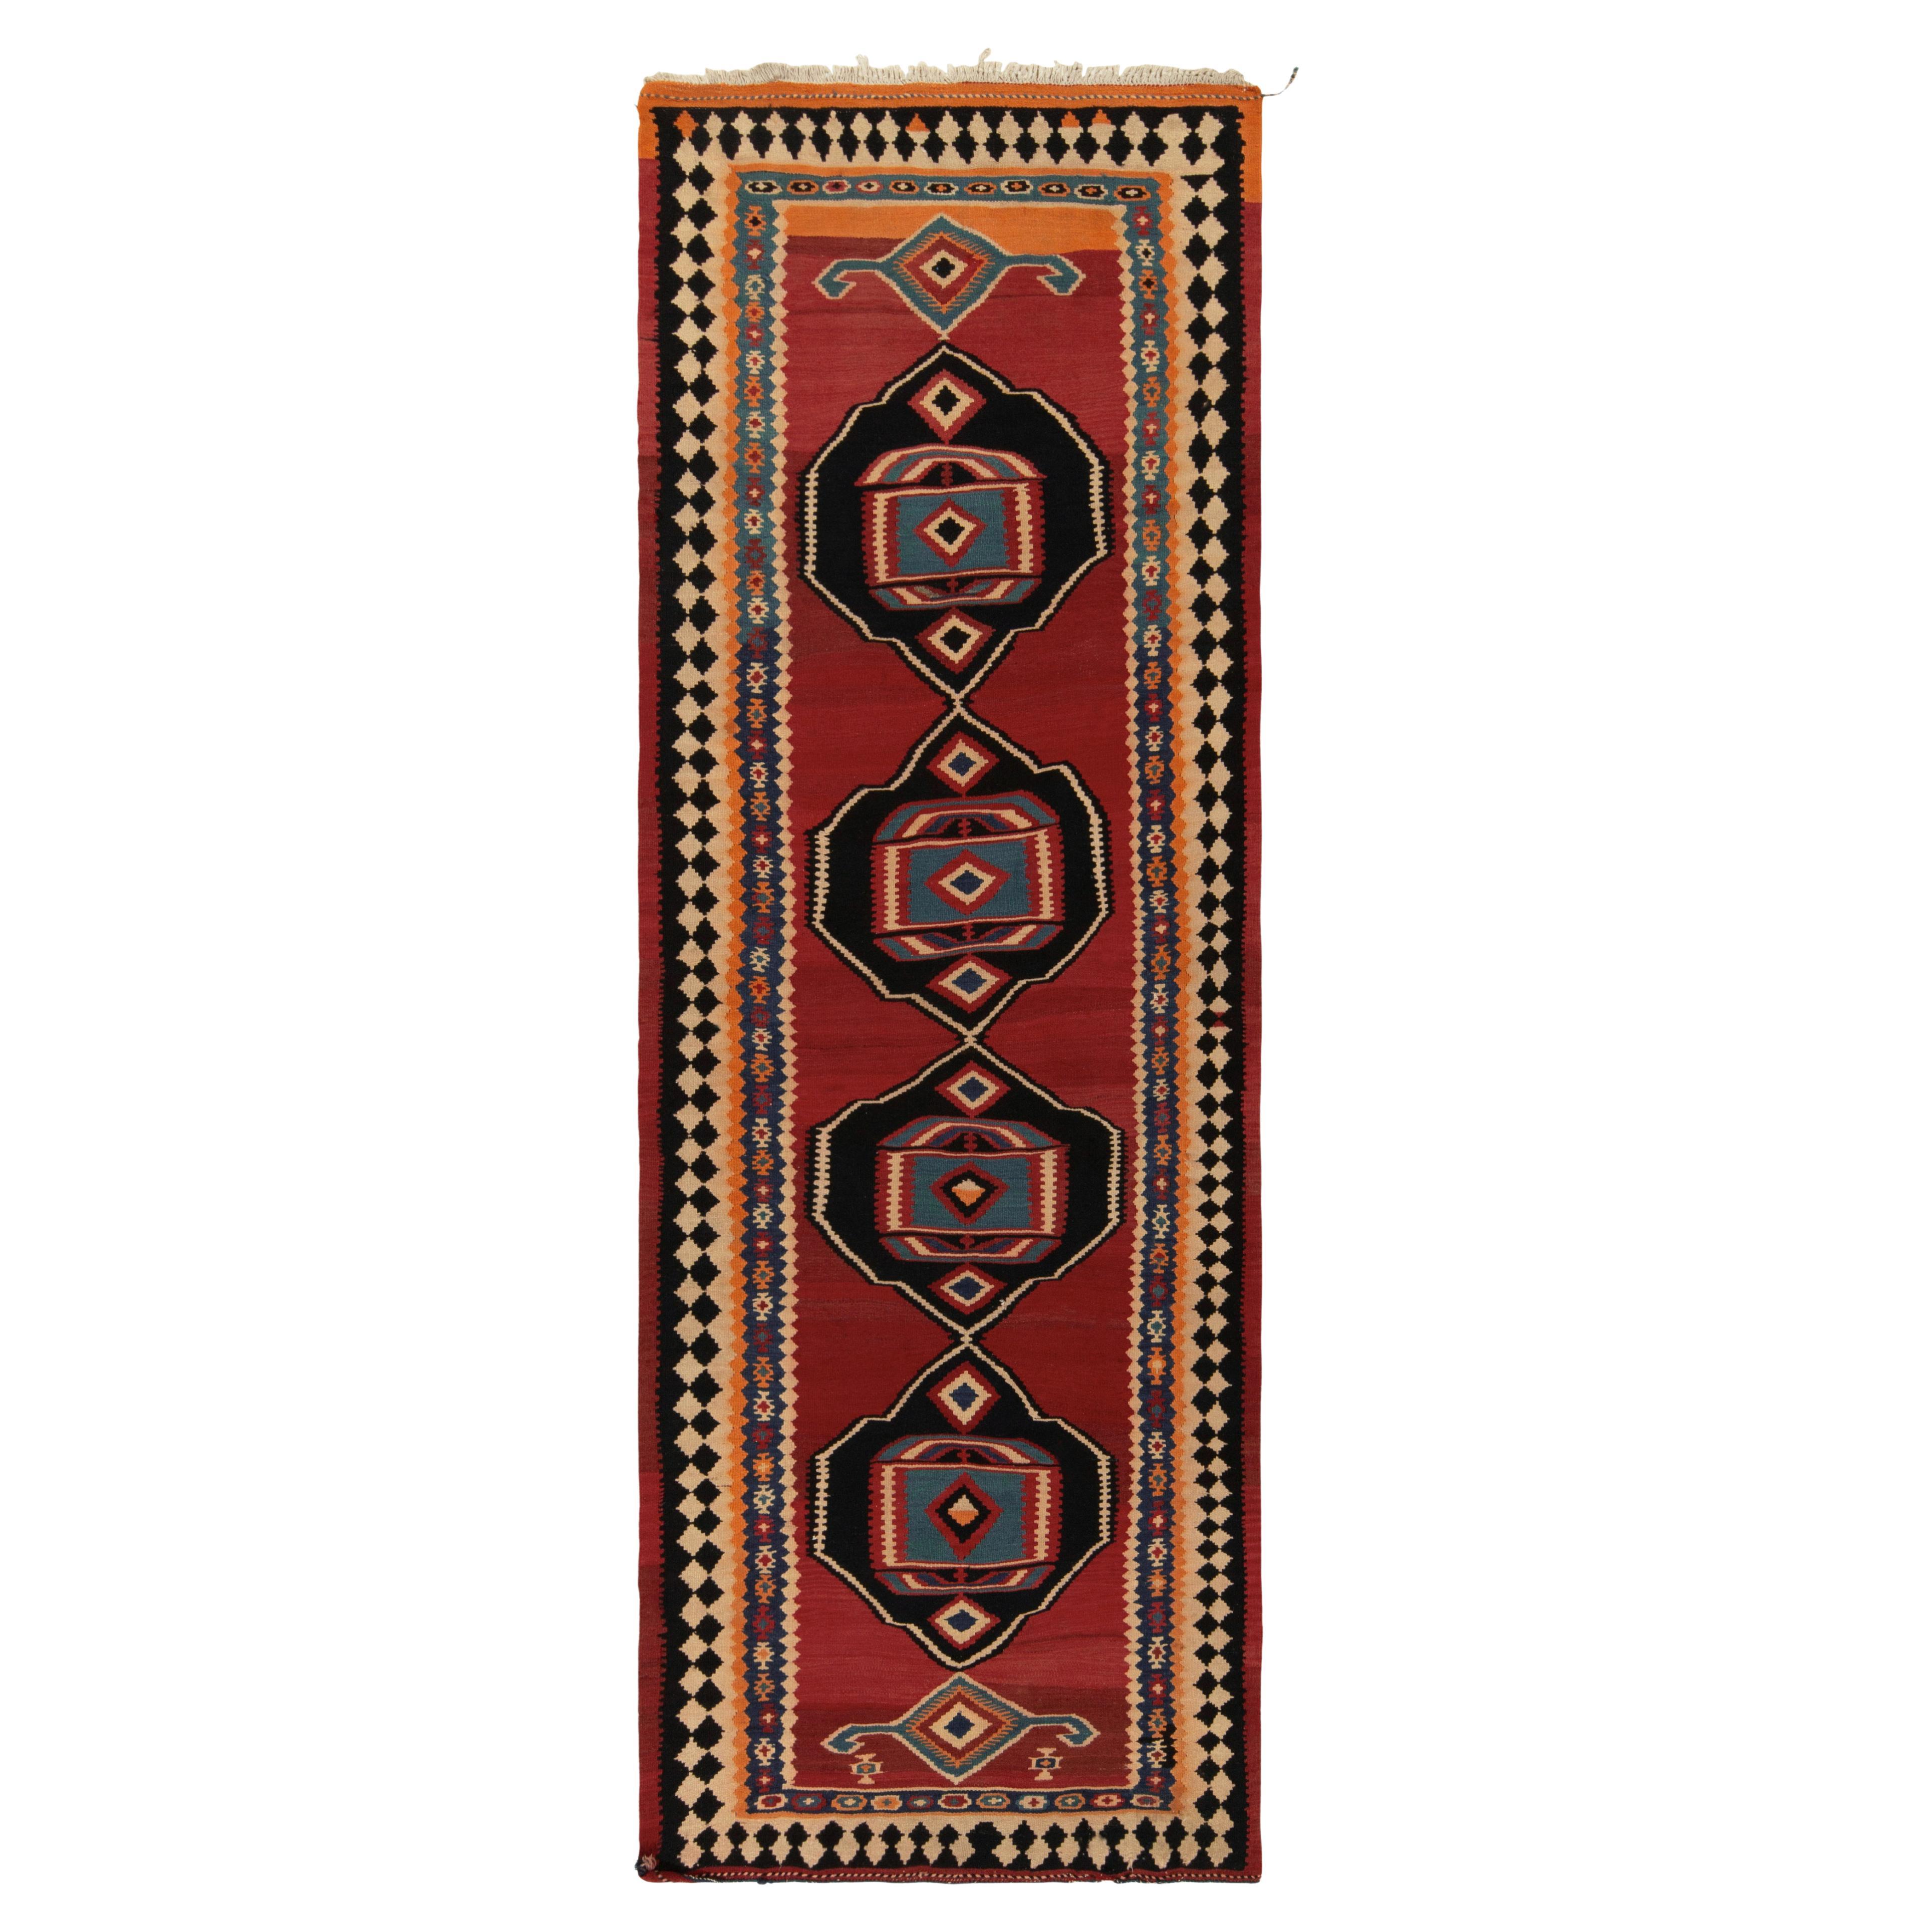 Vintage Kurdish Kilim rug in Red Black and Blue Medallion Pattern by Rug & Kilim